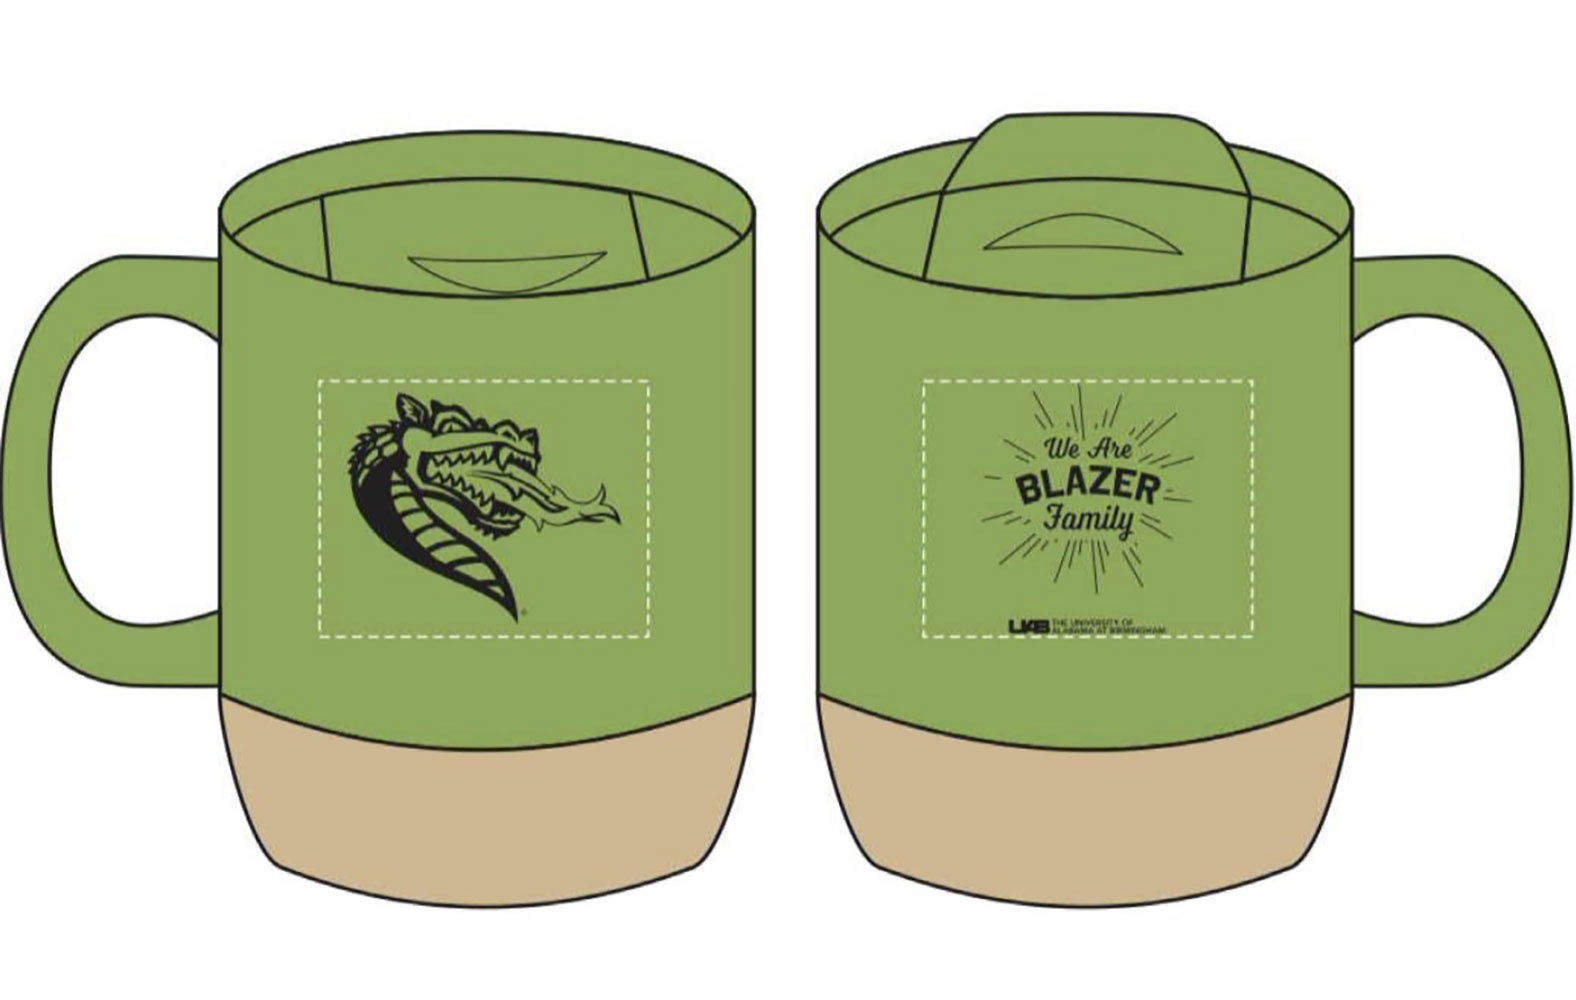 Illustration of proper UAB logo and unit placement on a mug.